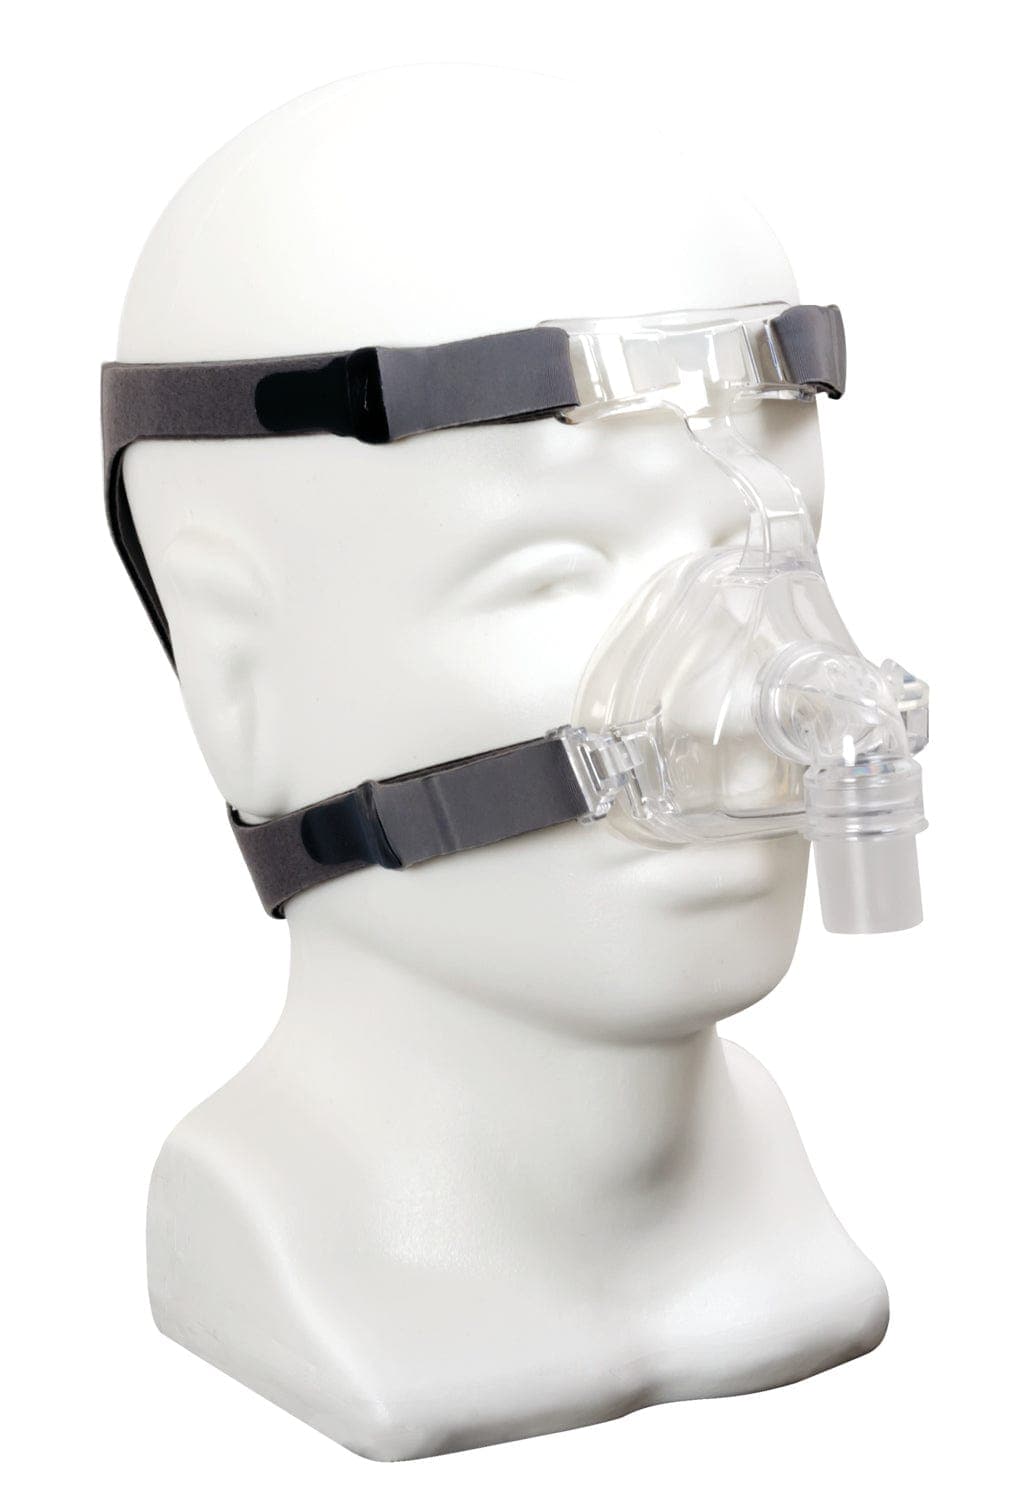 Compass Health Compass Health DreamEasy Nasal Mask with Headgear, Medium CPM-DENM